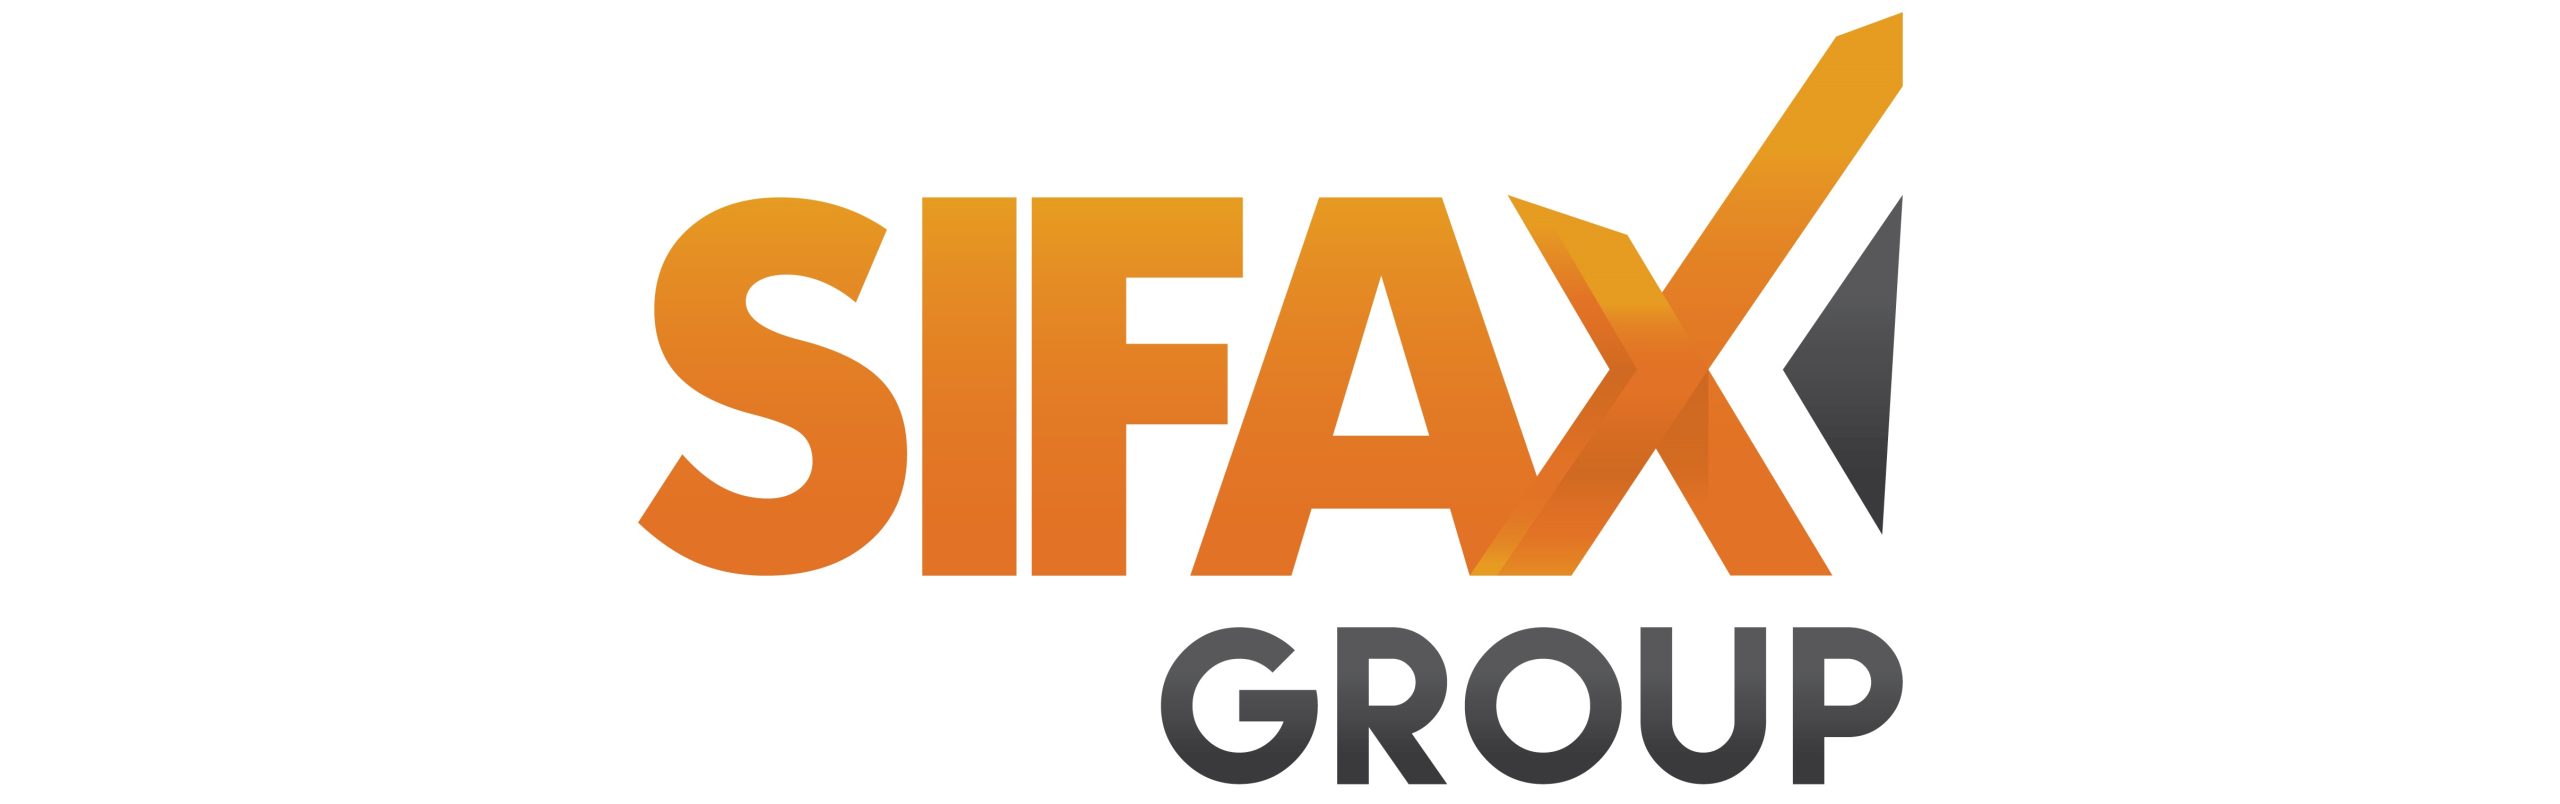 SIFAX-GROUP-MAIN (1)